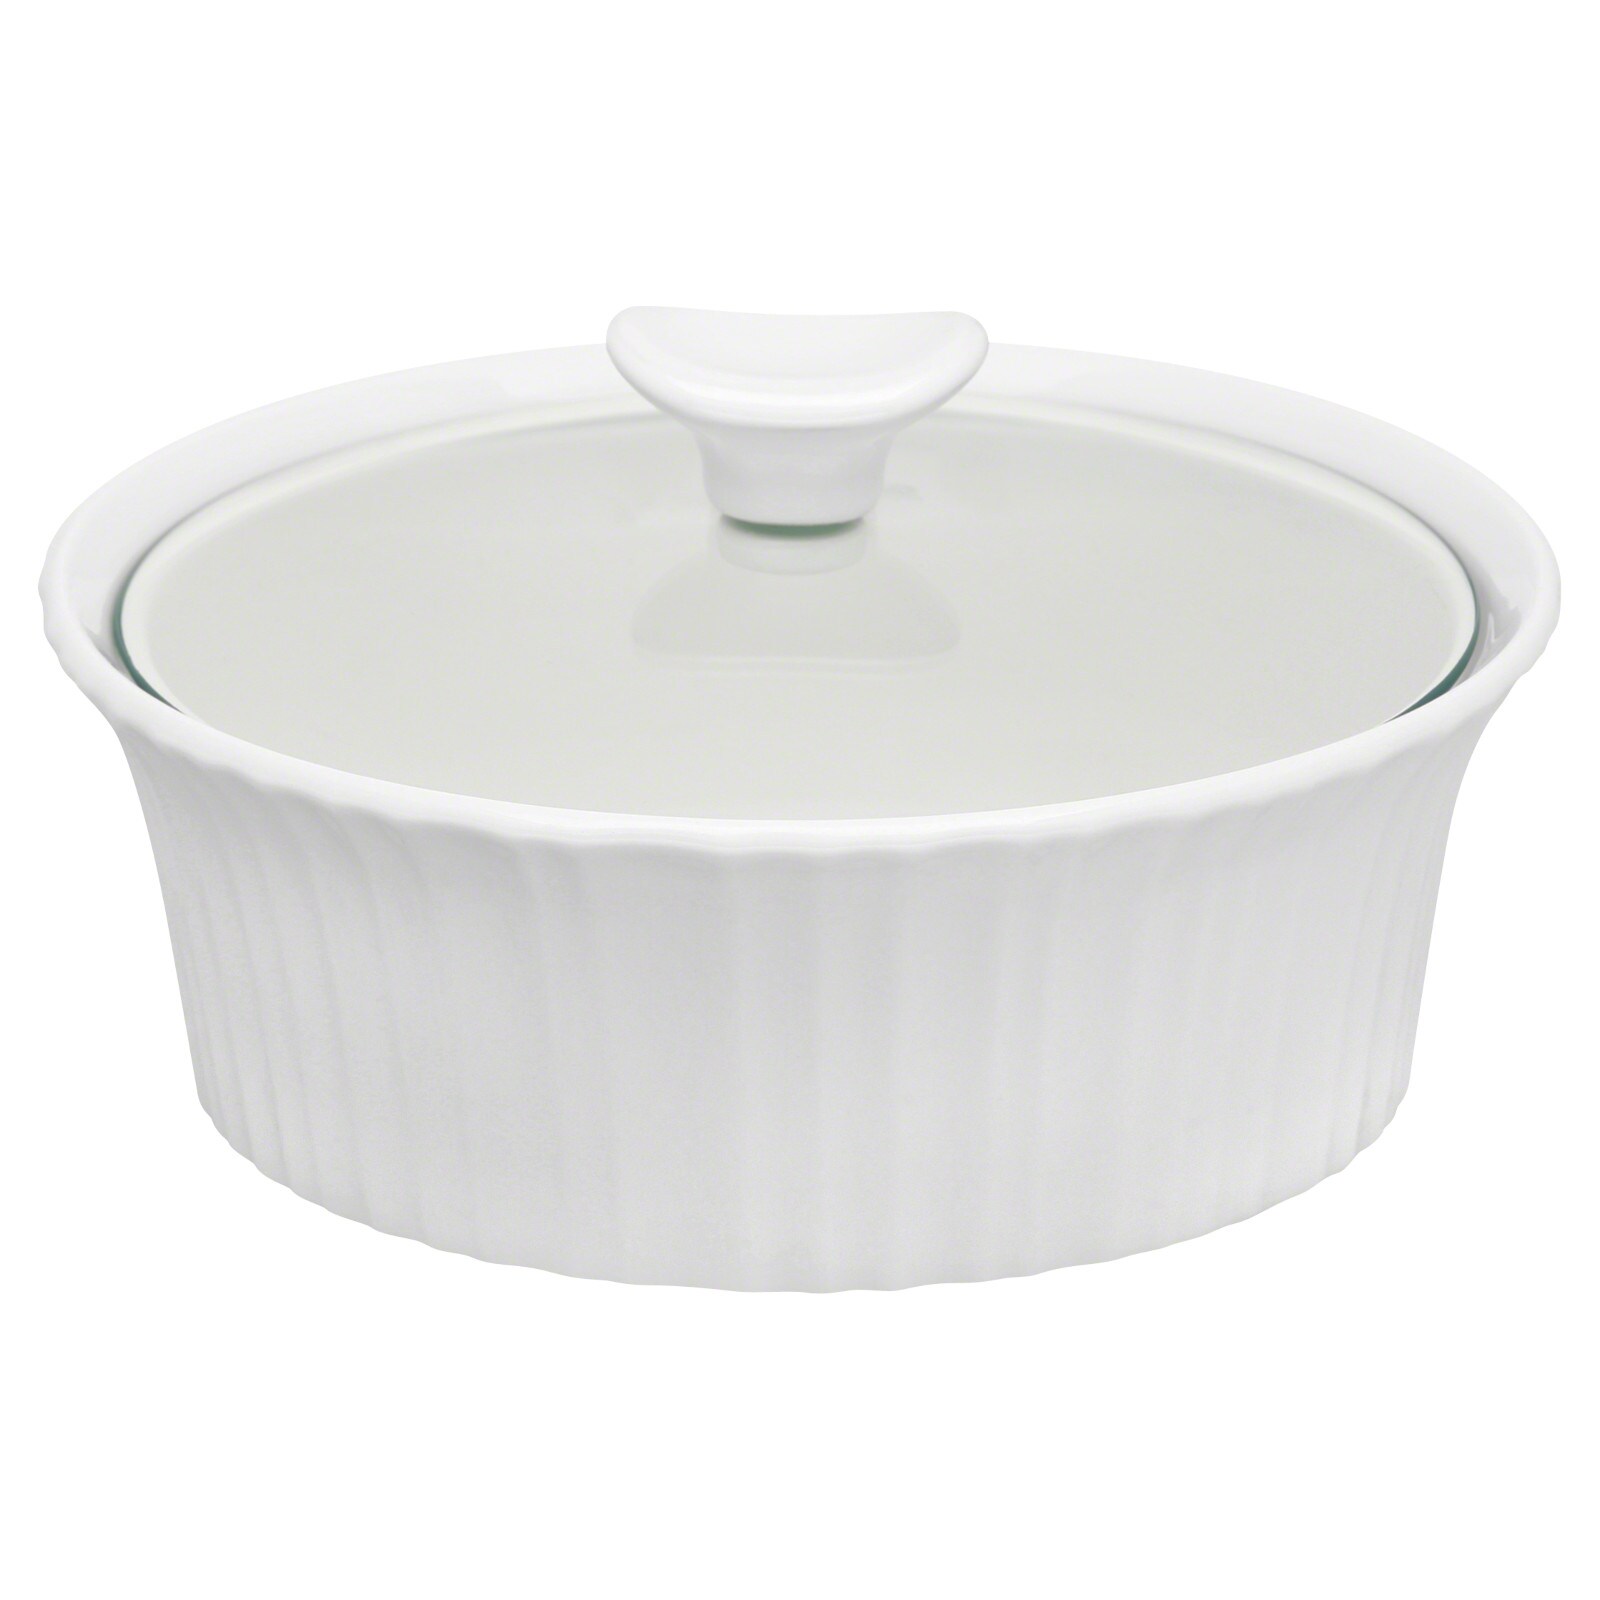 CorningWare French White 10-Pc Ceramic Bakeware Set with Lids, Chip and  Crack Resistant Stoneware Baking Dish, Microwave, Dishwasher, Oven, Freezer